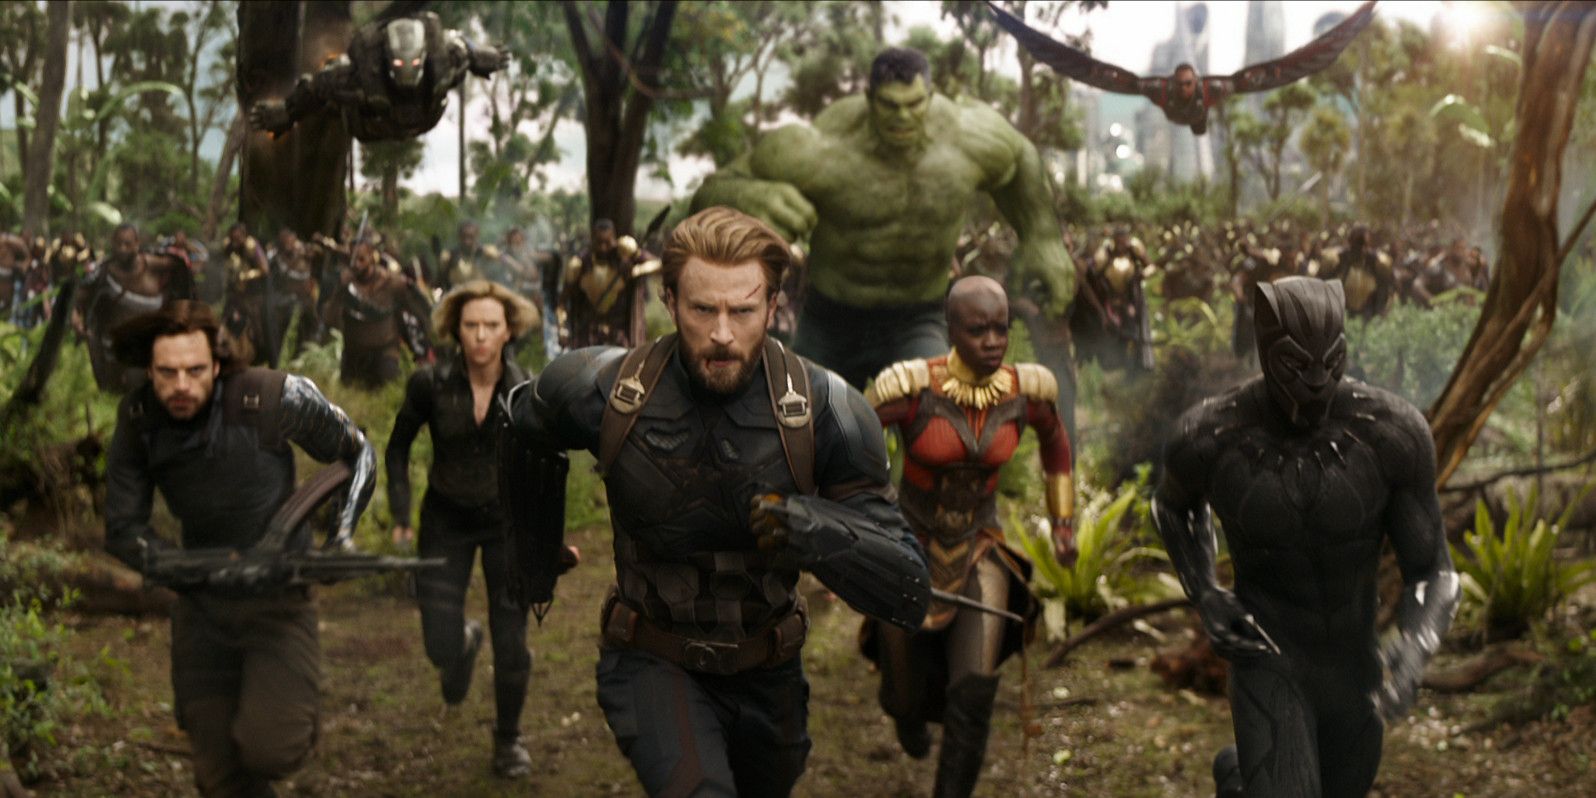 The MCU heroes in Avengers: Infinity War